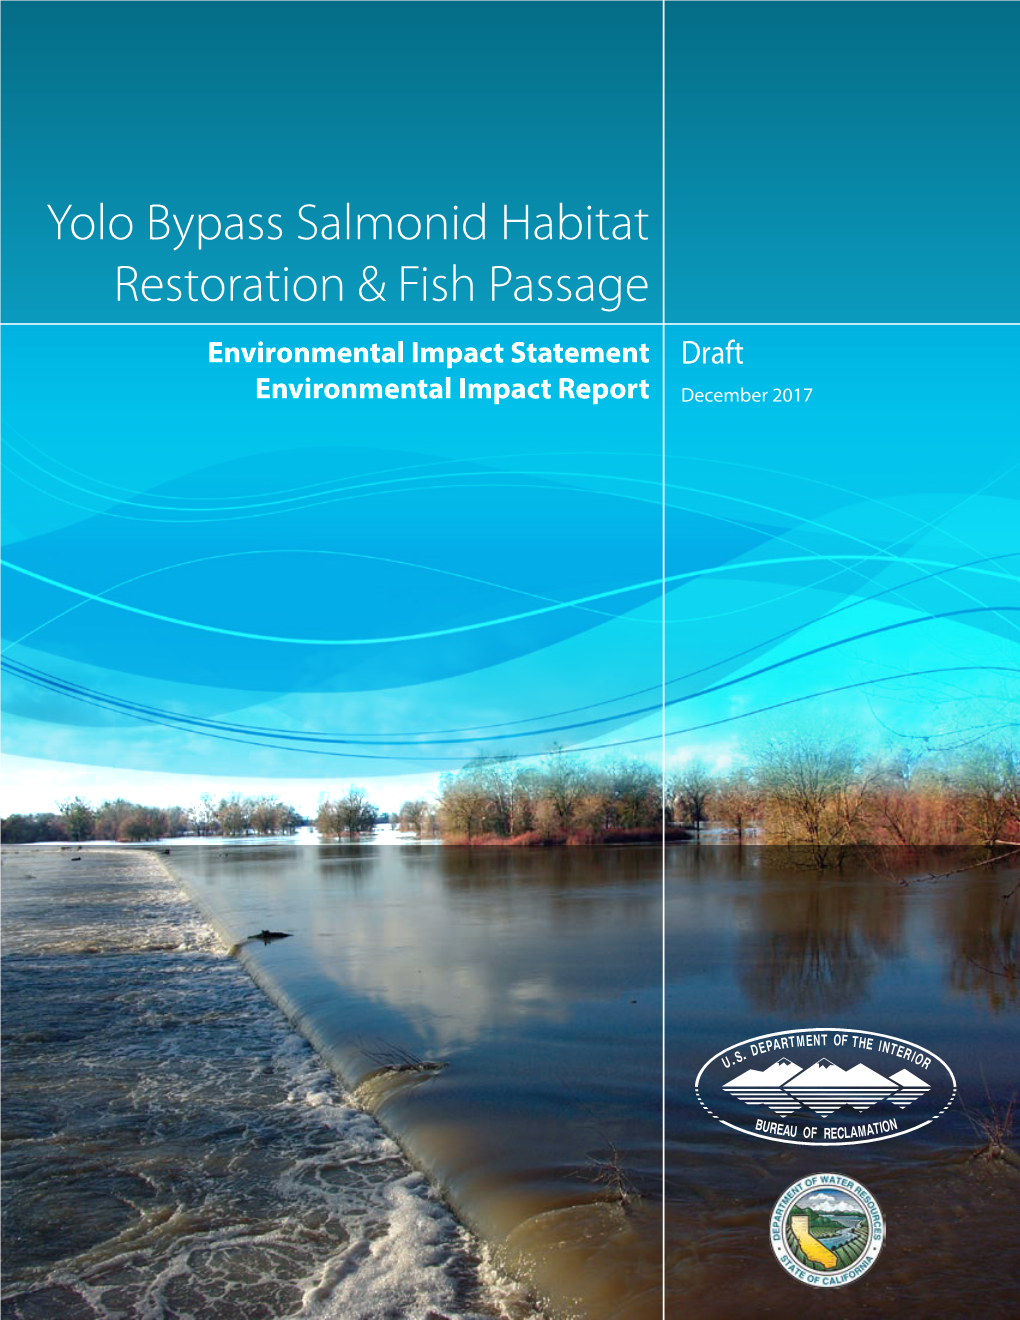 Draft Yolo Bypass Salmonid Habitat Restoration & Fish Passage EIS/EIR